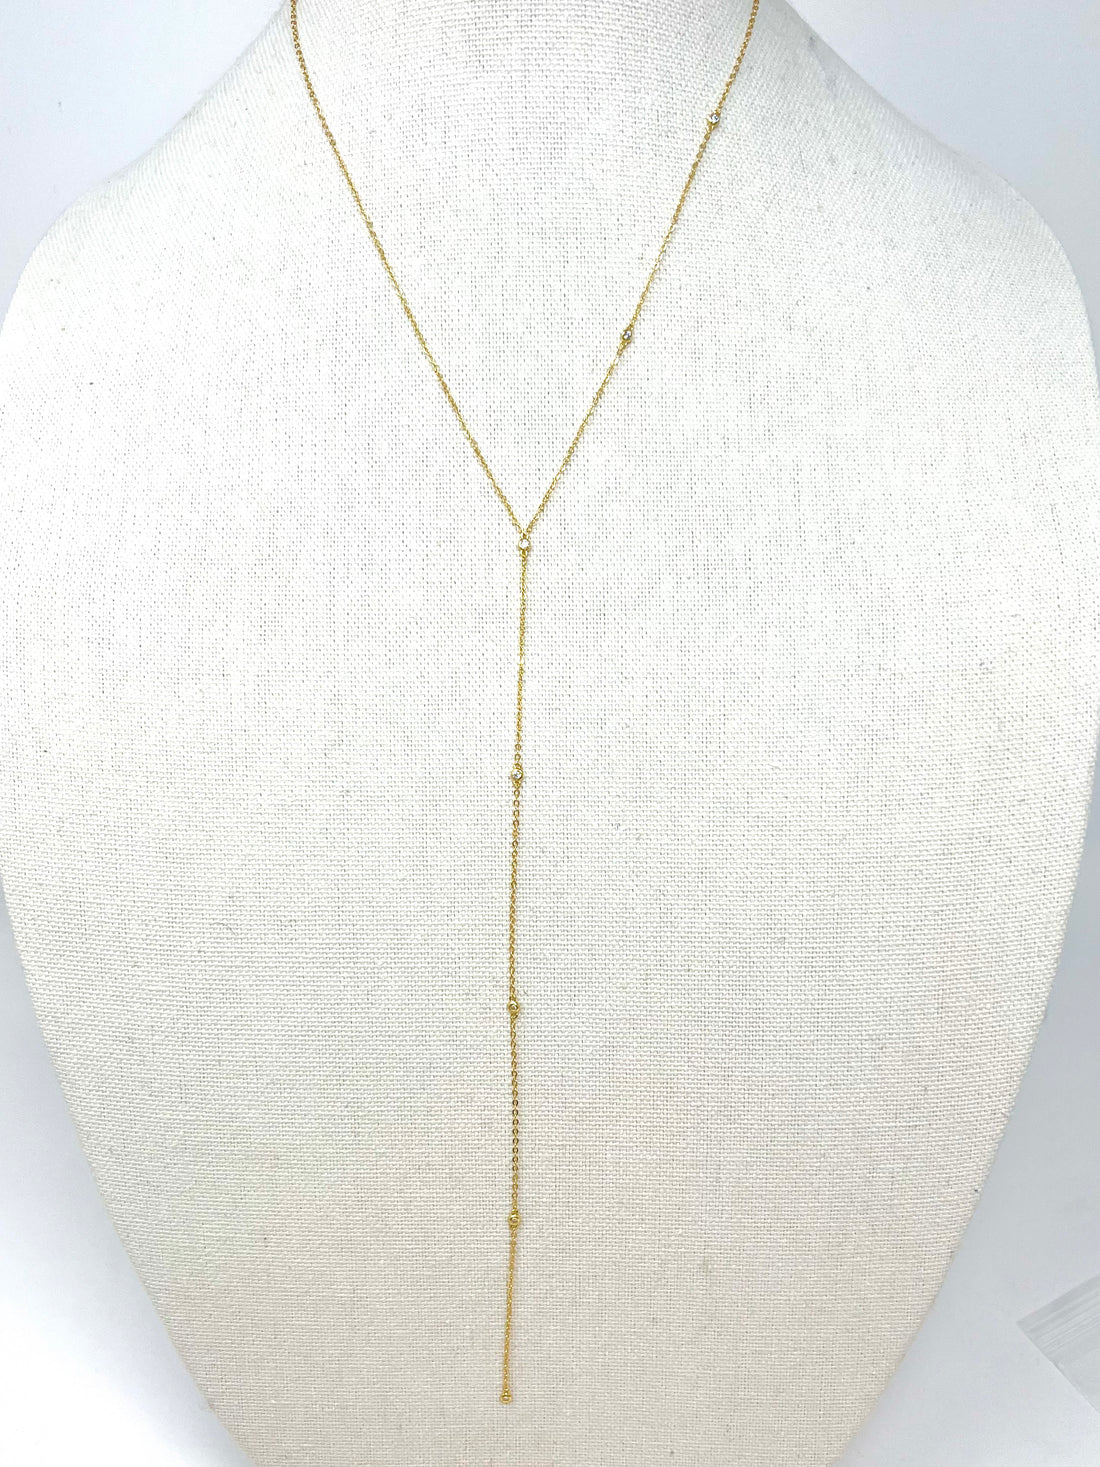 Mykonos Lariat Necklace in Gold